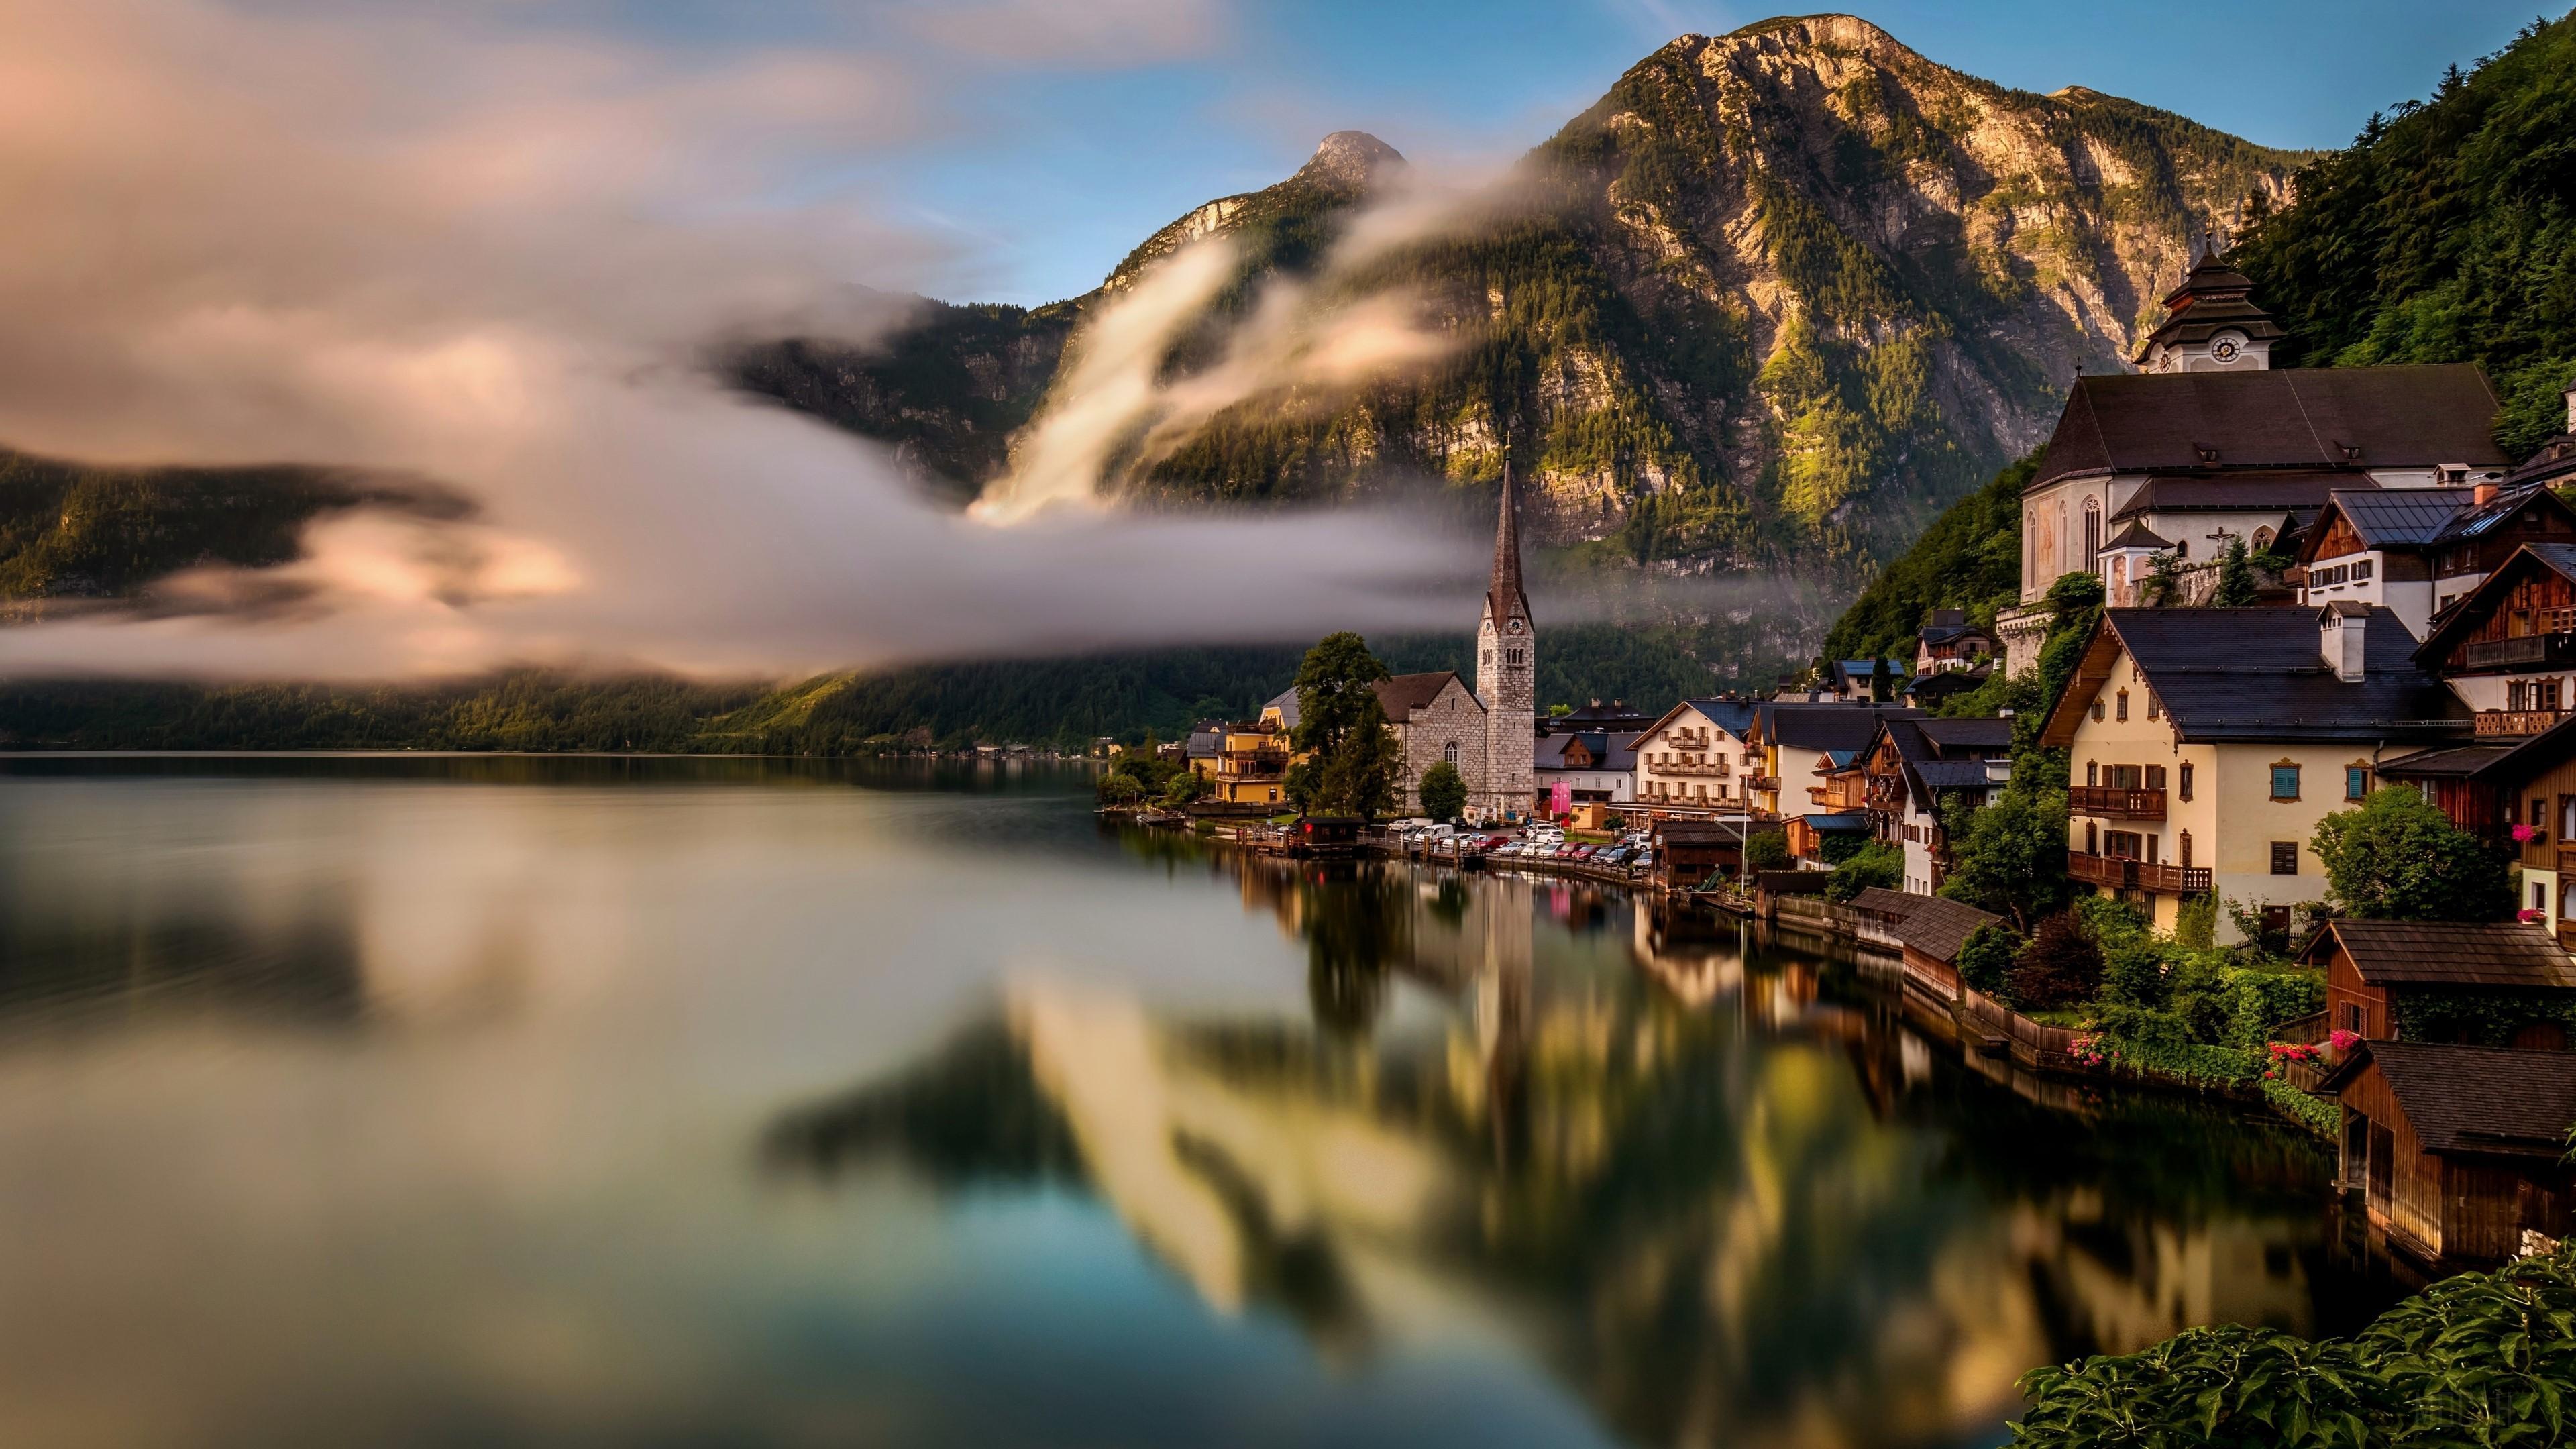 HD wallpaper, Reflection 4K, Mountain, Lake, Austria, House, Hallstatt